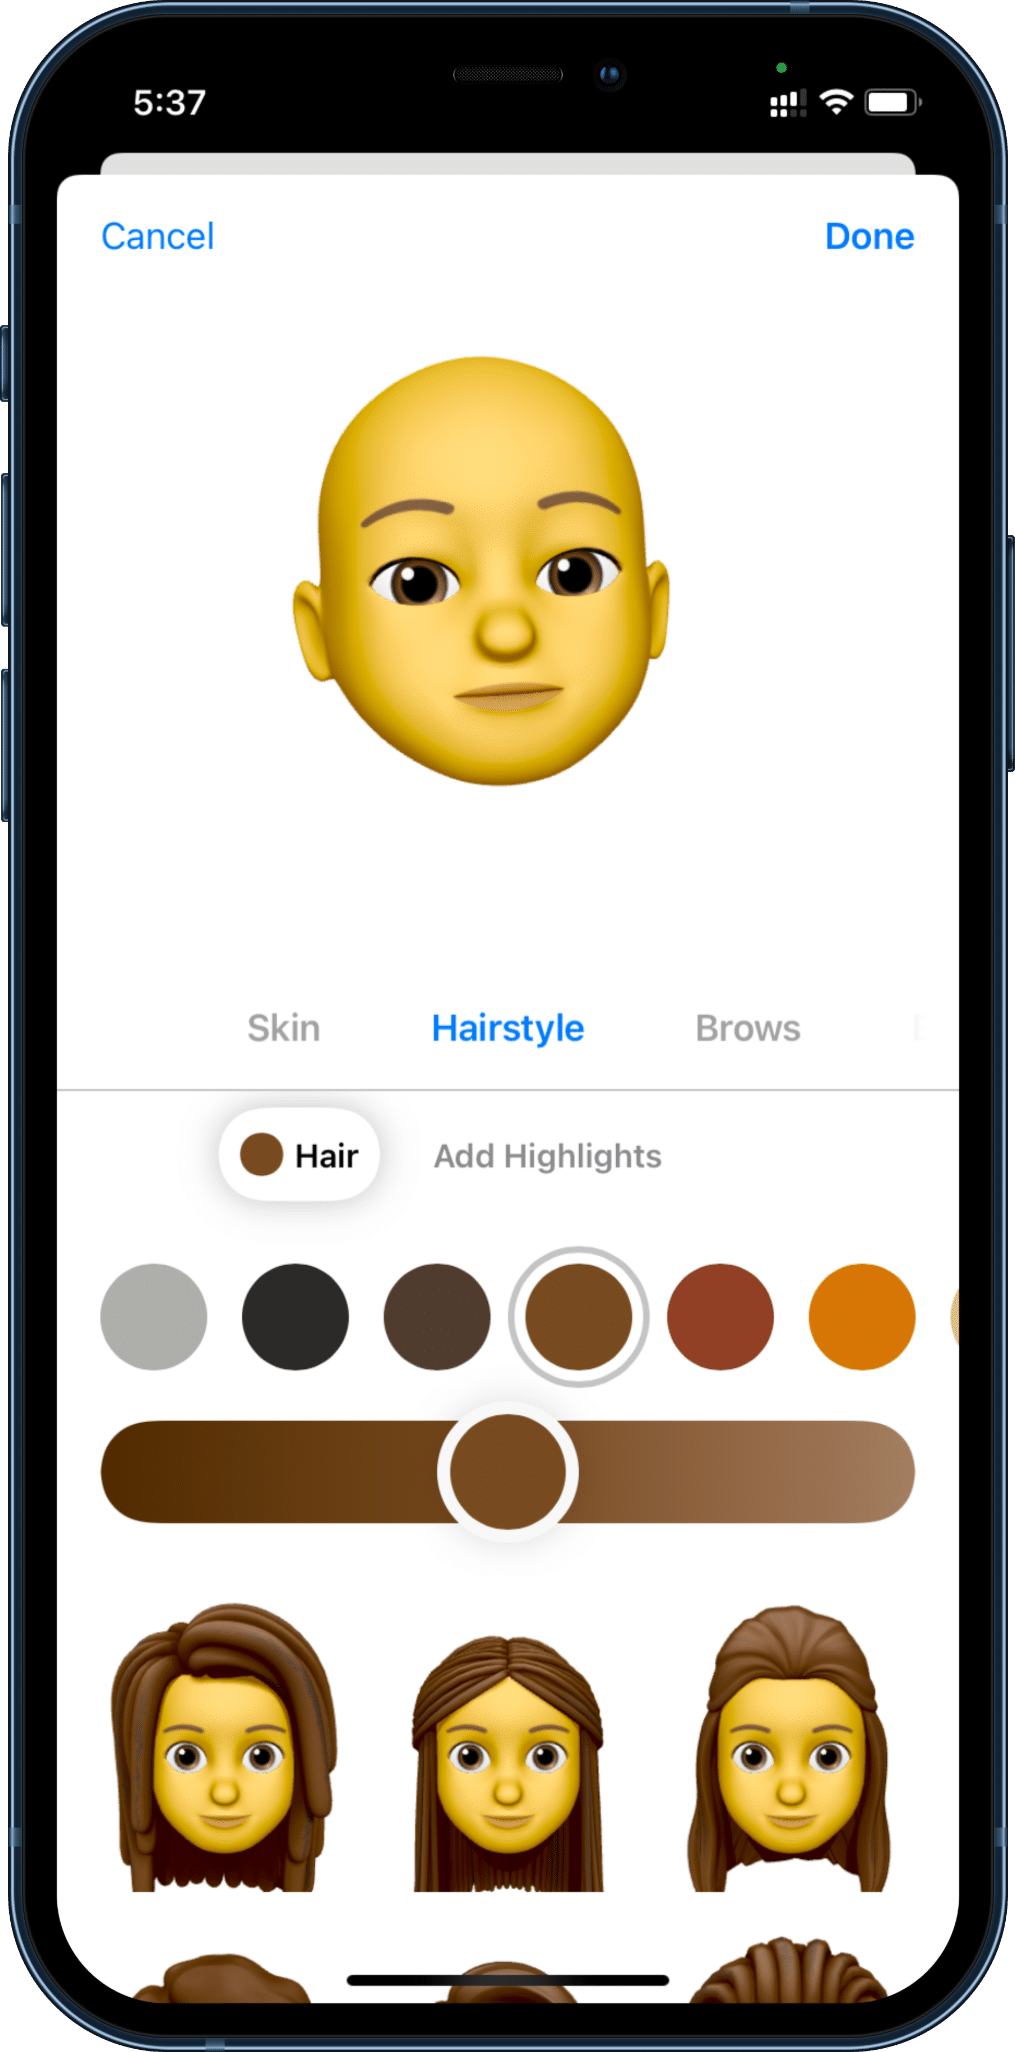 New Memoji menu in Messages in iOS 15